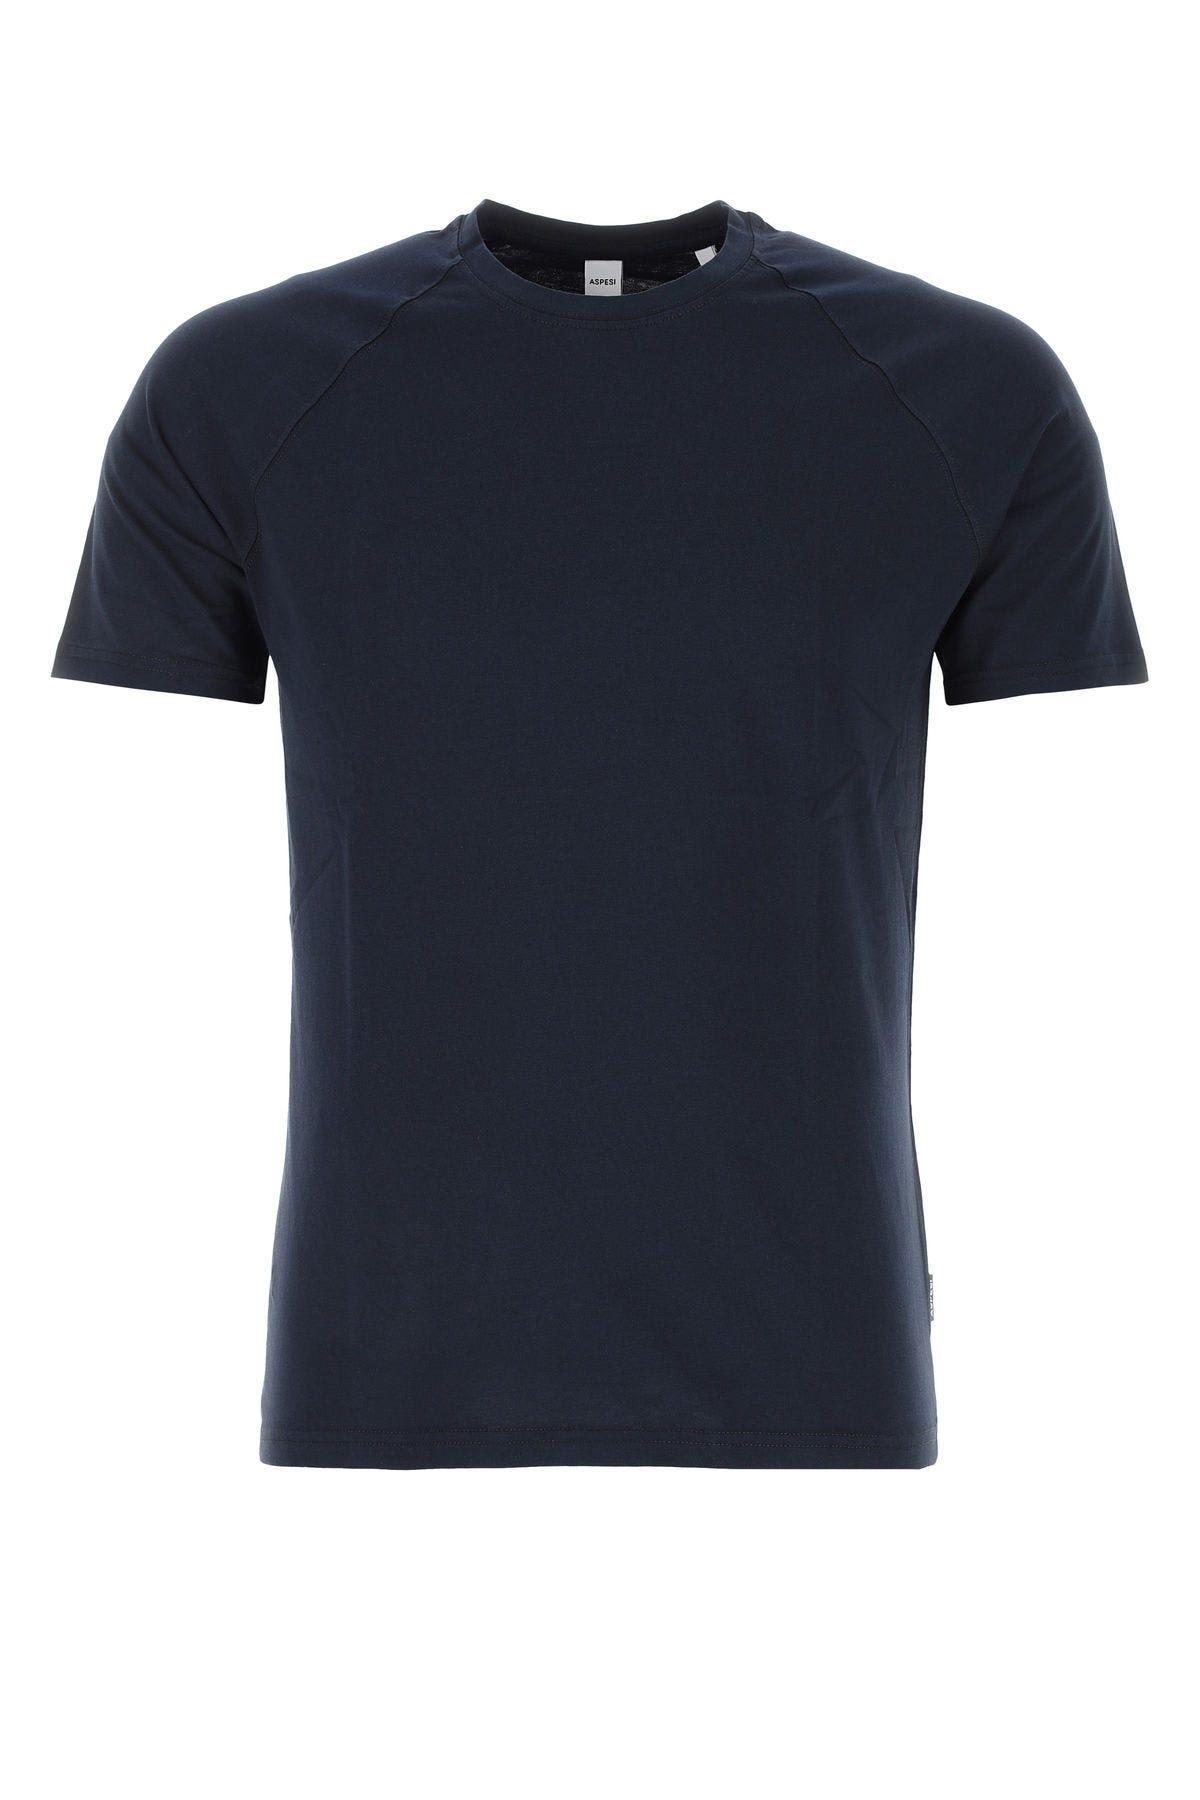 Shop Aspesi Navy Blue Cotton T-shirt